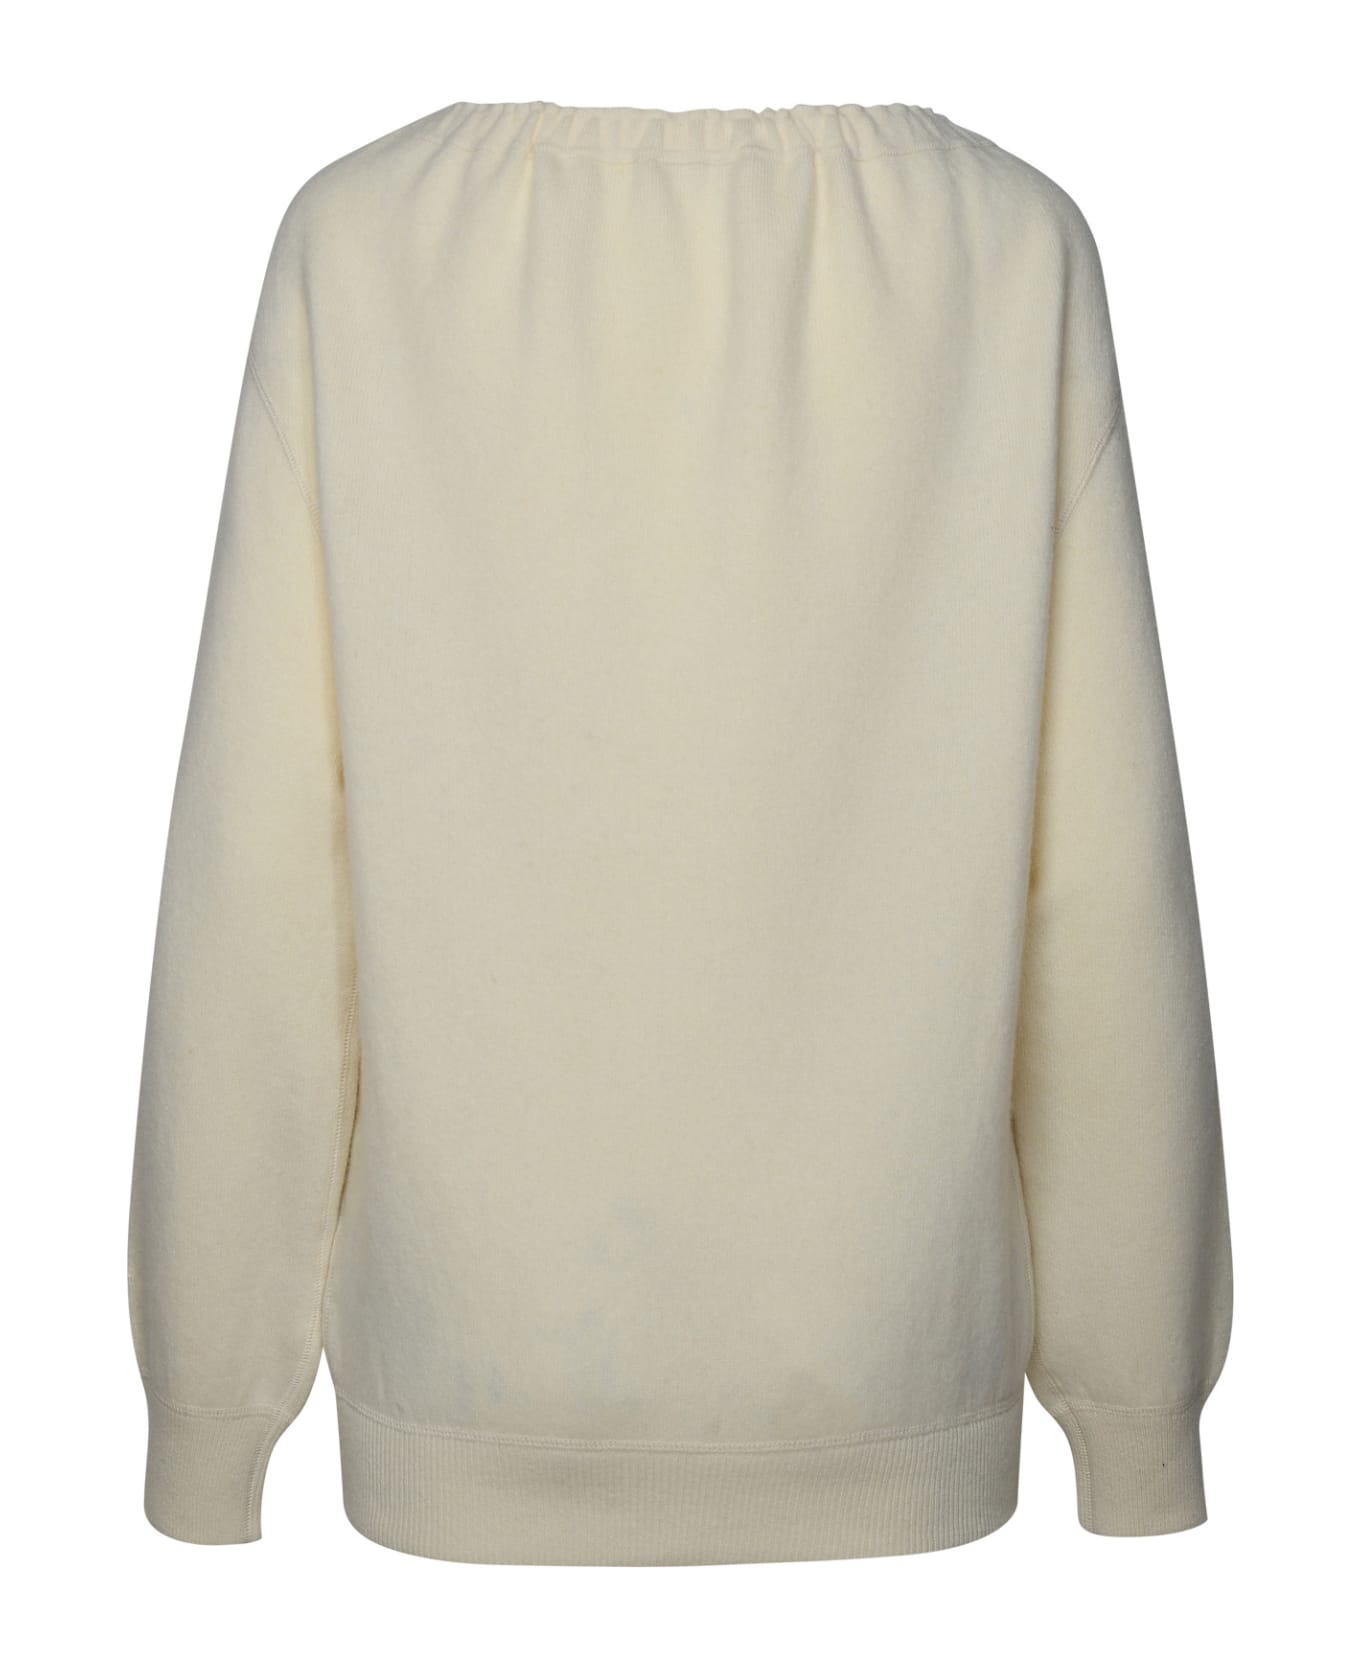 Jil Sander Cream Cashmere Sweater - Cream フリース